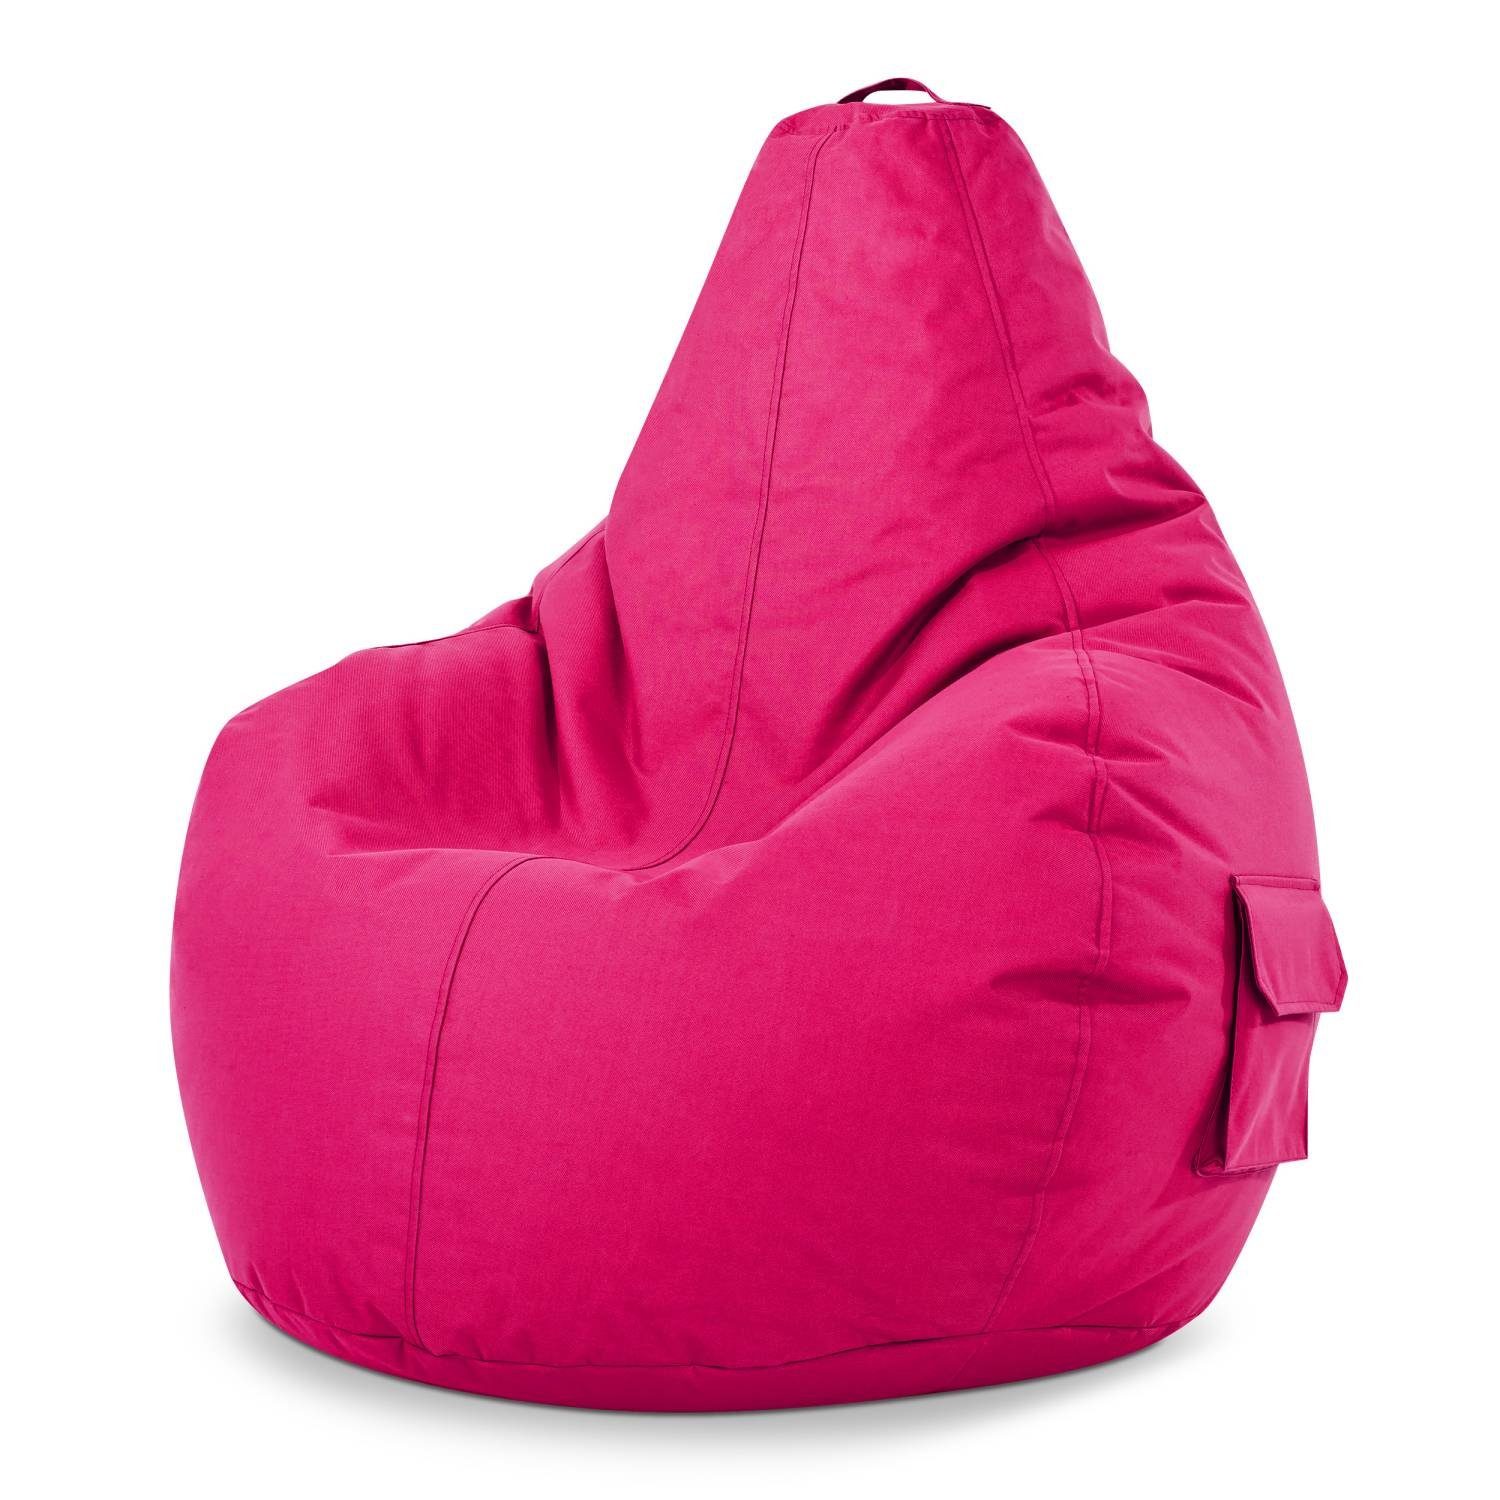 Green Bean Sitzsack Cozy (Sitzsack mit Rückenlehne 80x70x90cm - Gaming Chair mit 230L Füllung, Kuschelig Weich Waschbar), Bean Bag Bodenkissen Lounge Sitzhocker Relax-Sessel Gamer Gamingstuhl Pink